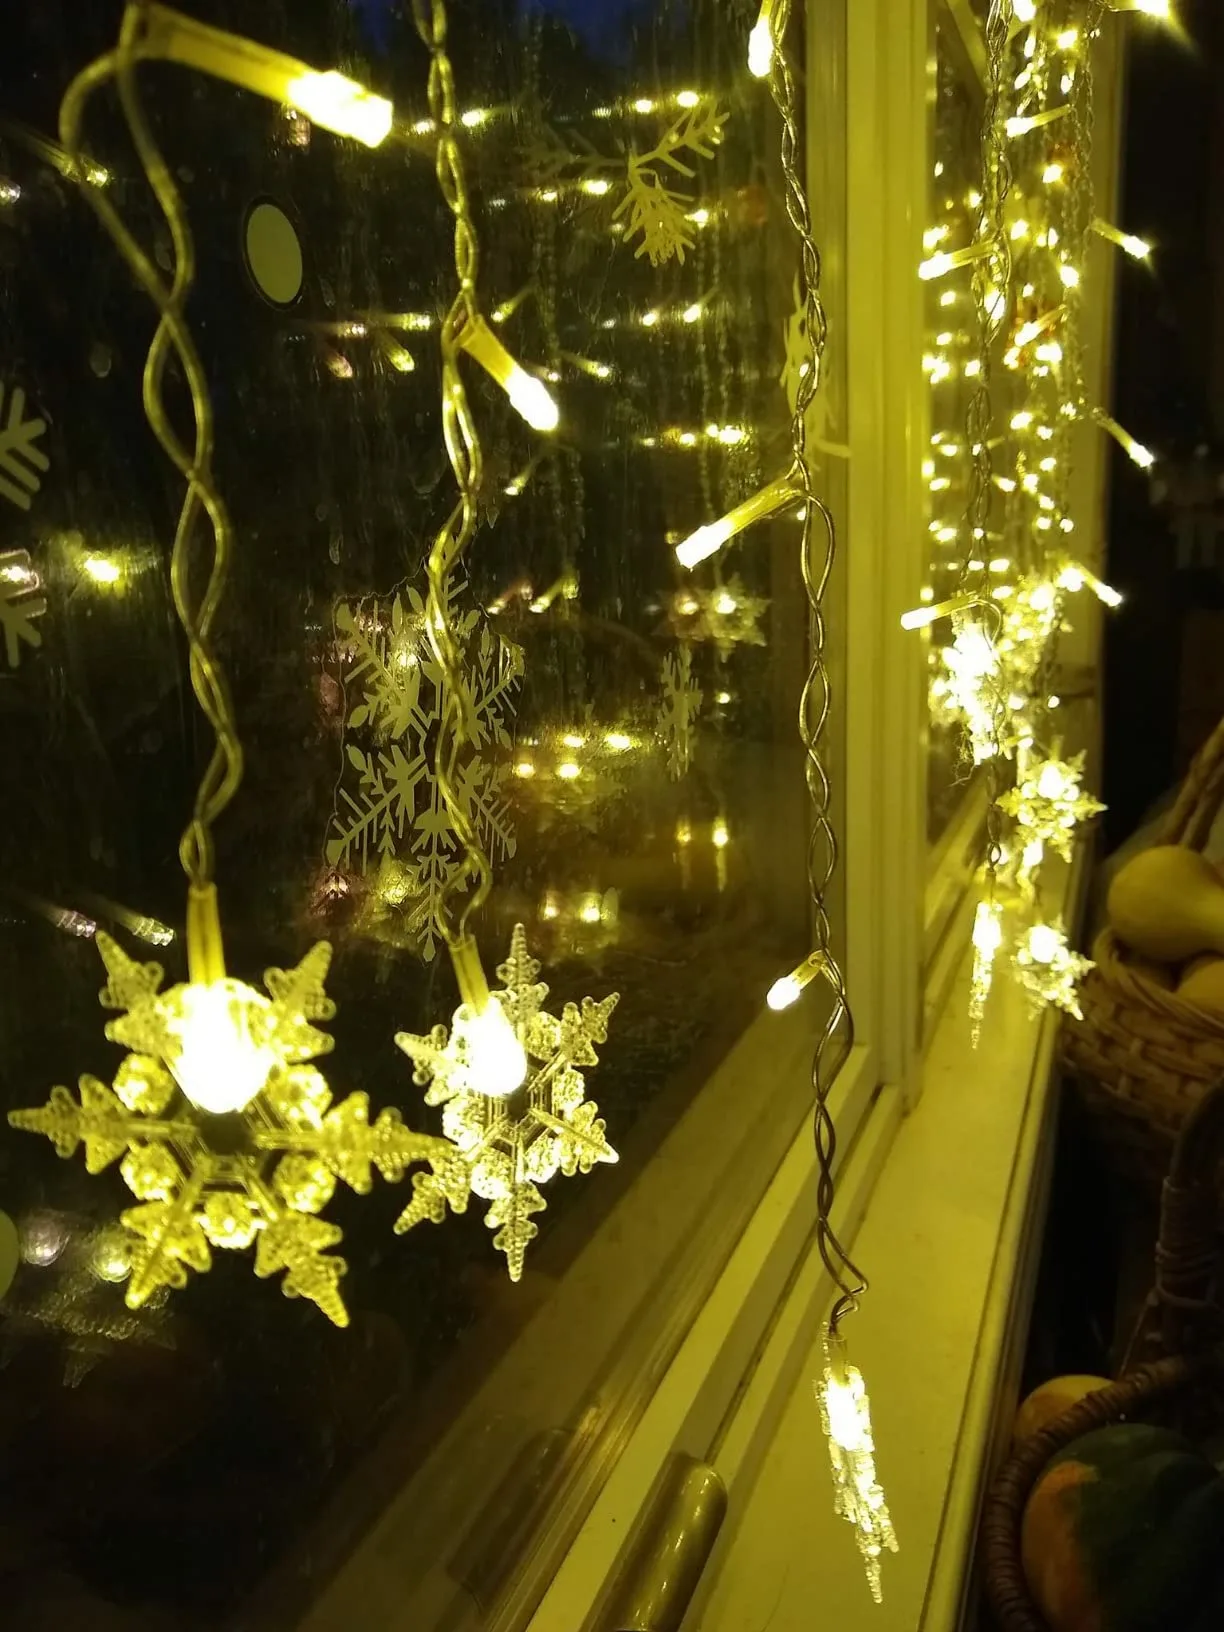 Warm Stringlights Closeup Side Angle View Glass Window Snowflake Christmas Lights